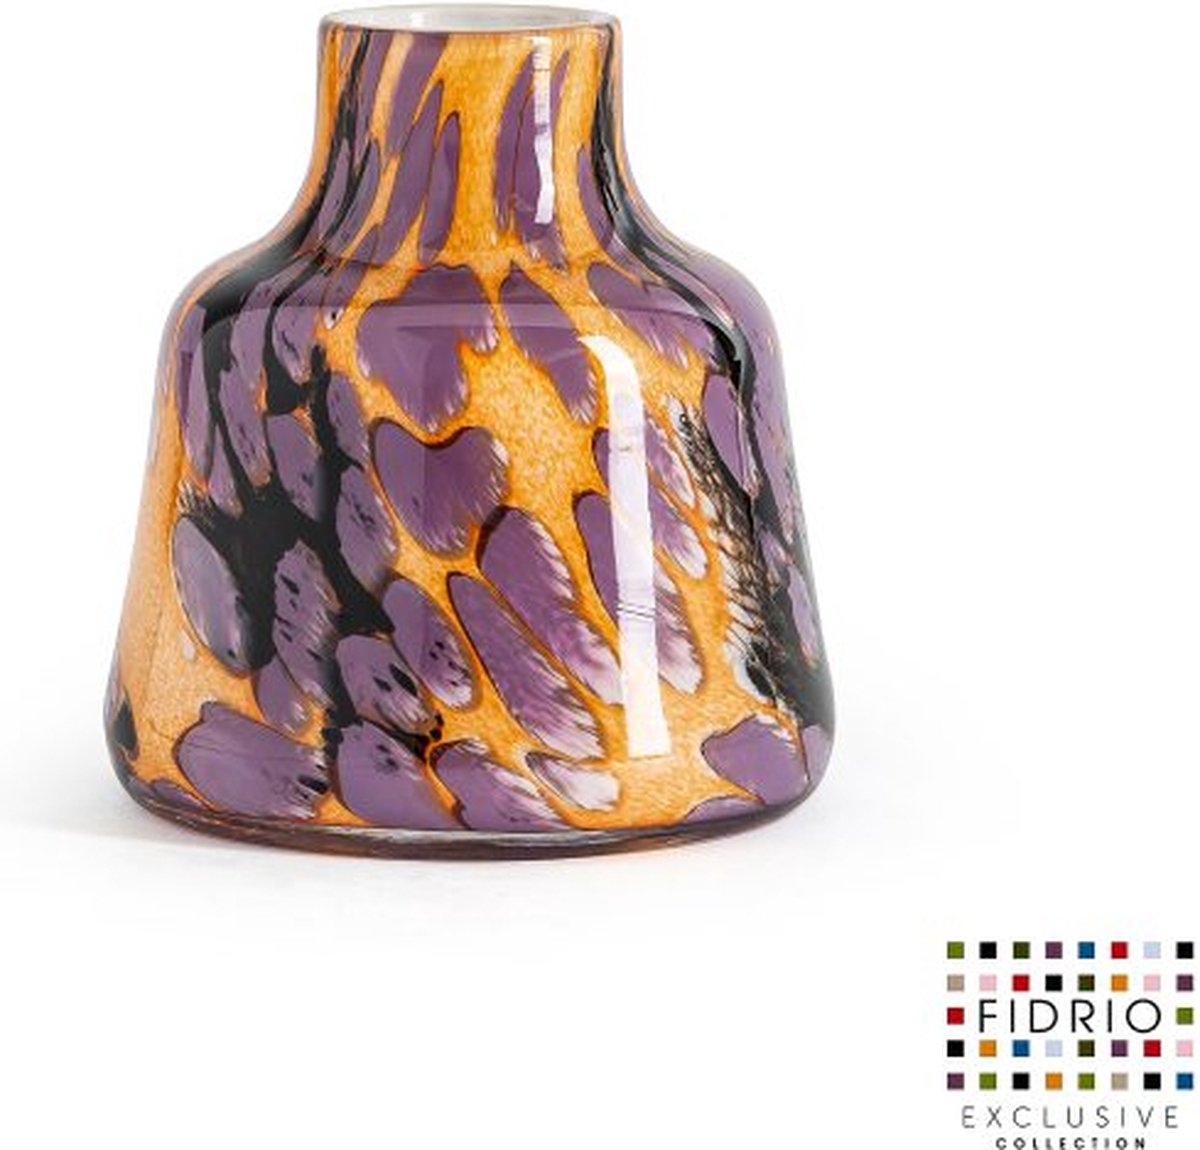 Fidrio Design Vaas Toscany TRICOLOR glas mondgeblazen bloemenvaas diameter 8 cm hoogte 25 cm